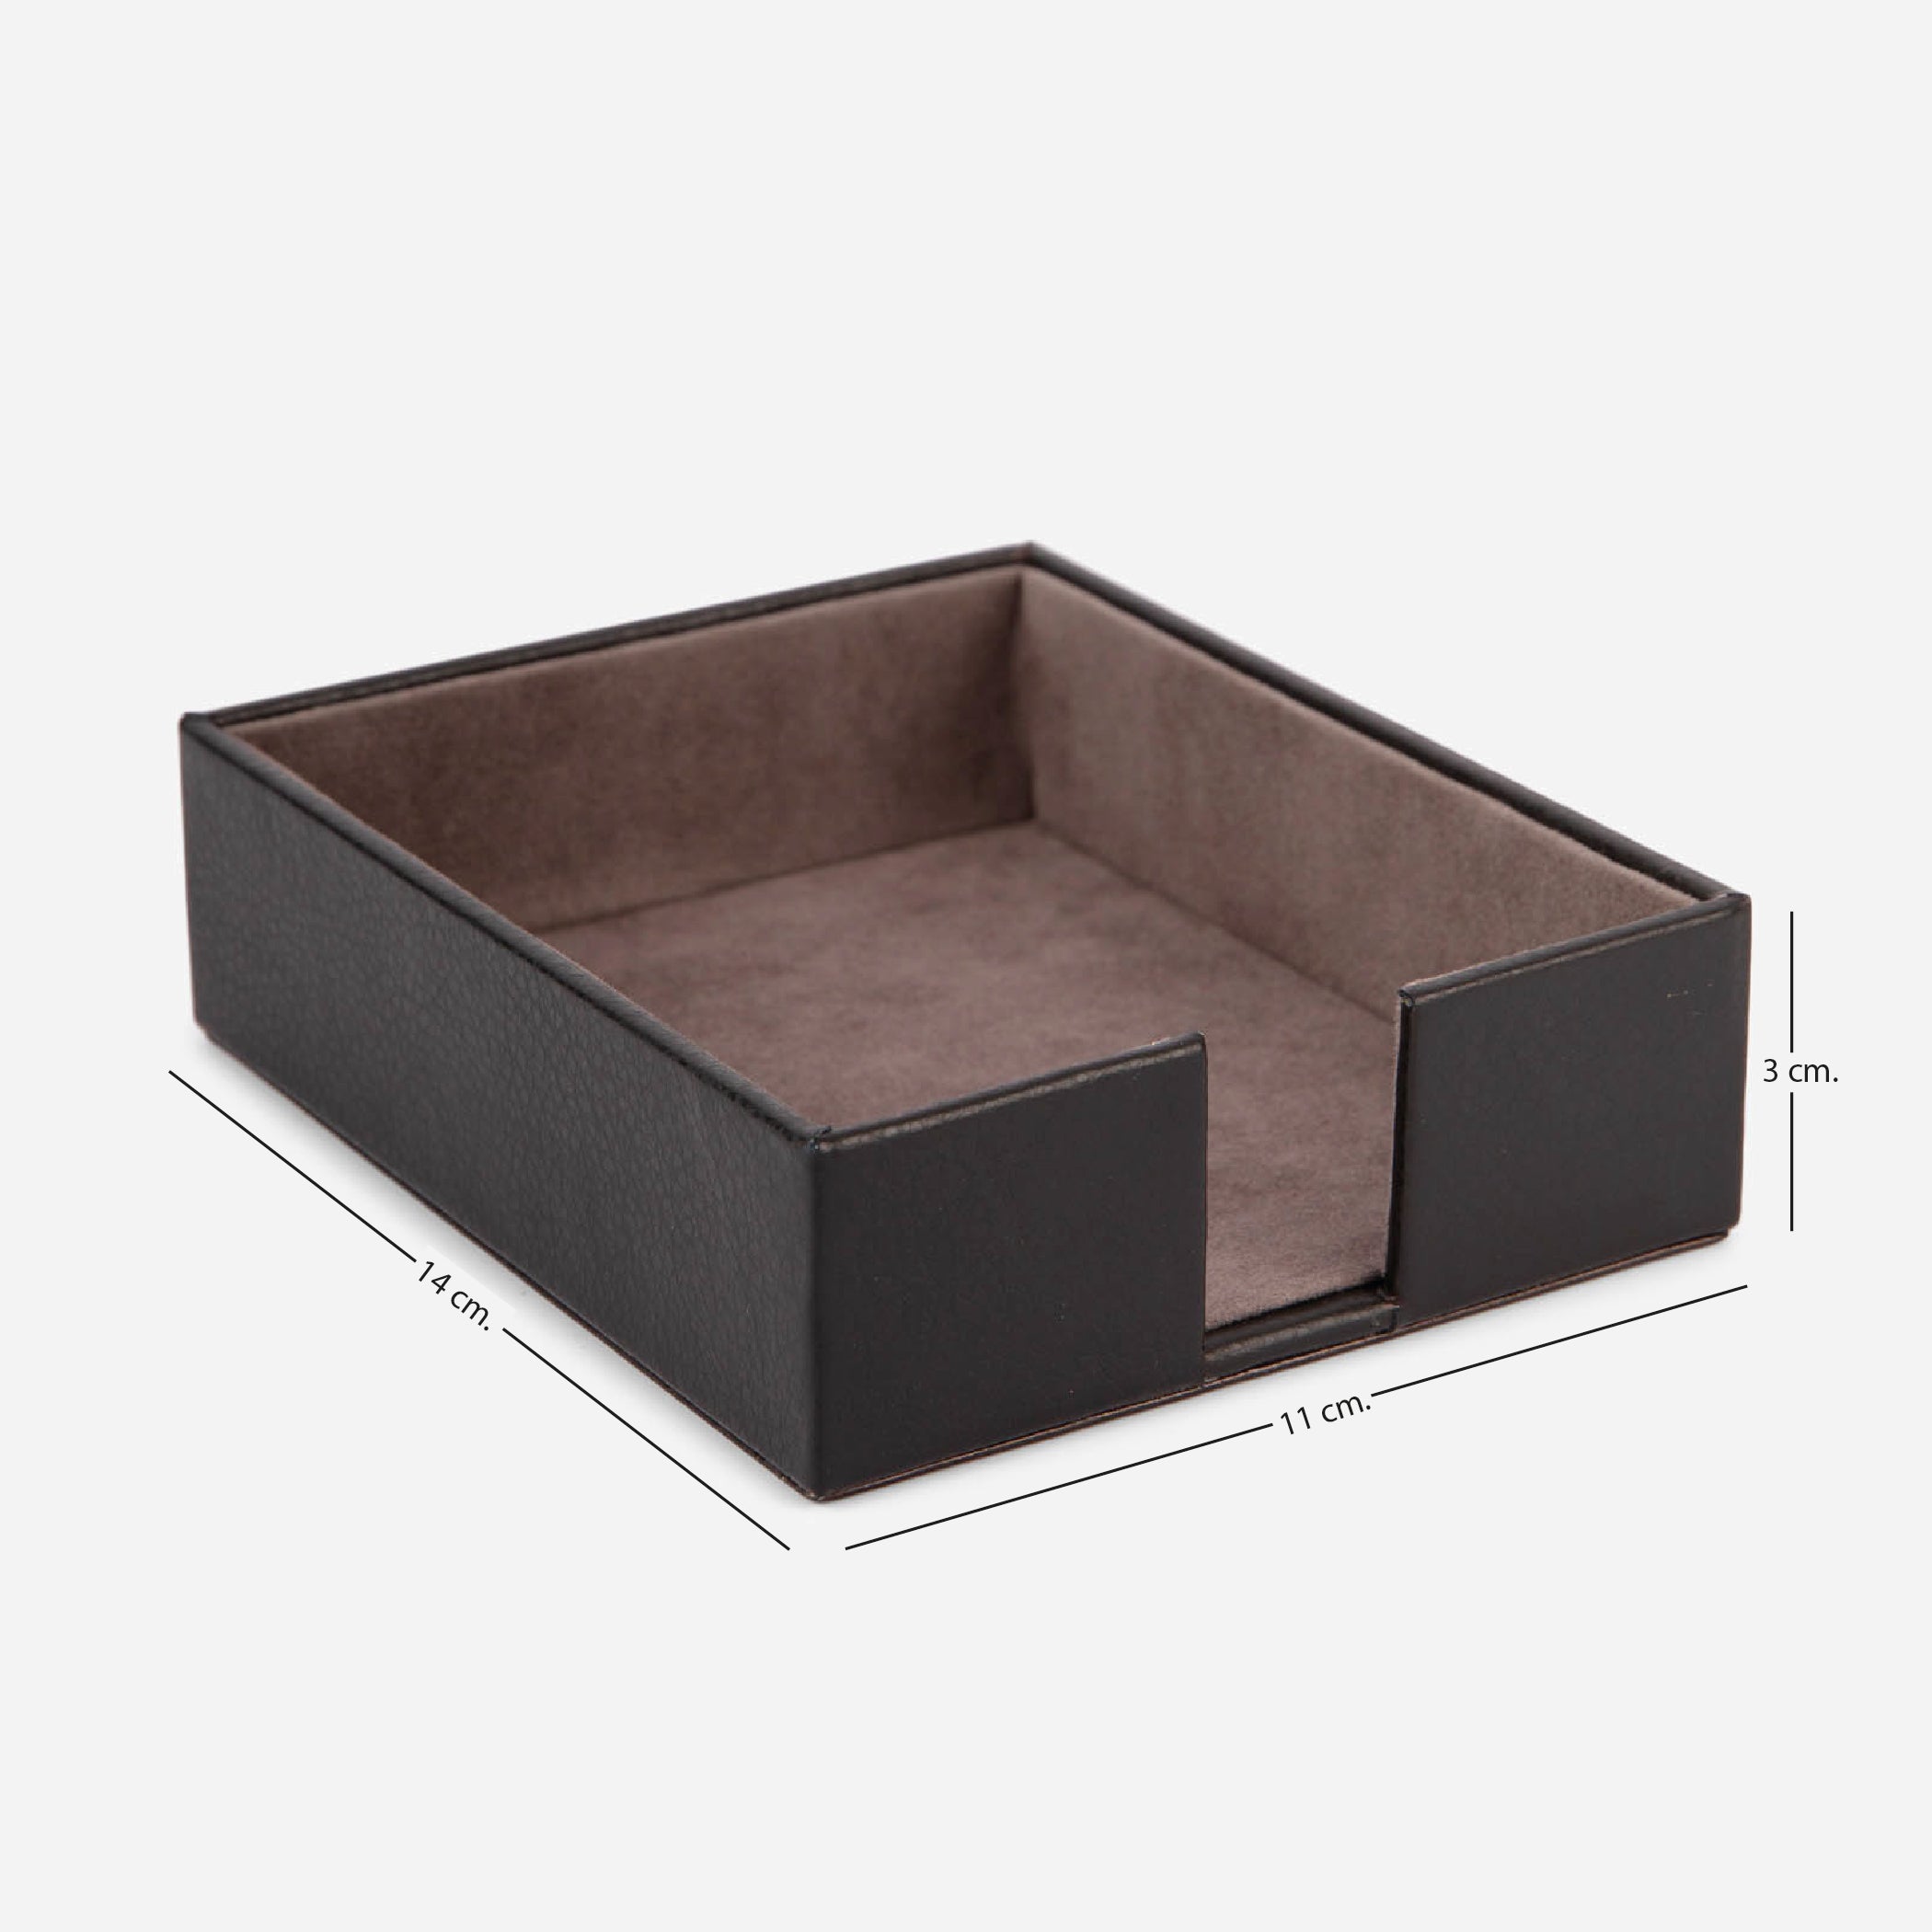 Vegan Leather Trays and Premium Desk Set- Black